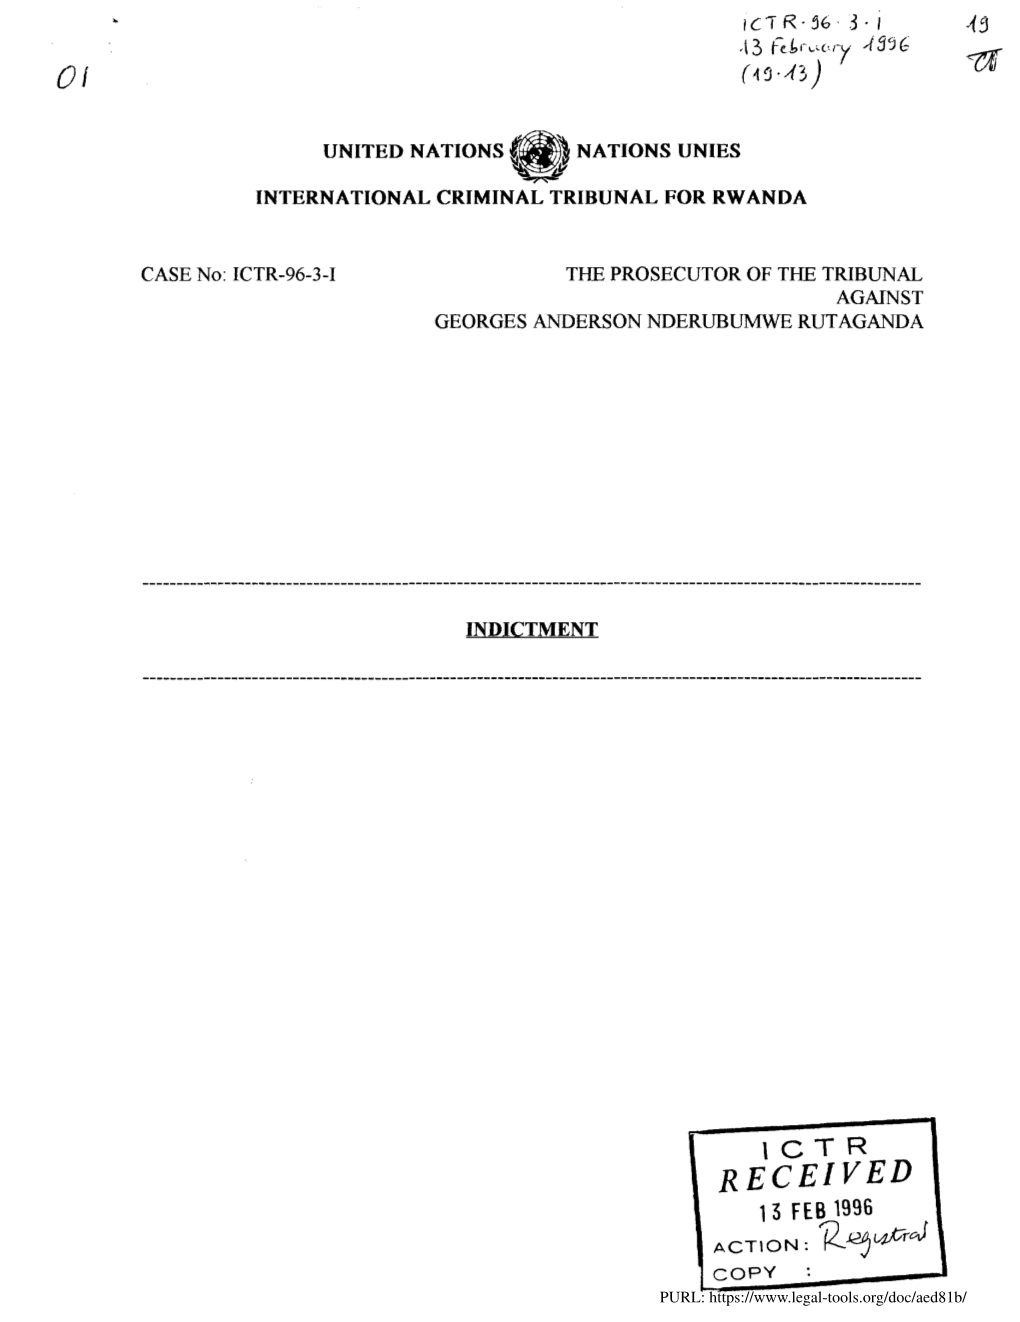 RECEIVED 13 FEB 1996 ACTION: 12-~(4M-Cj Copy I PURL: the INTERNATIONAL CRIMINAL TRIBUNAL for RWANDA